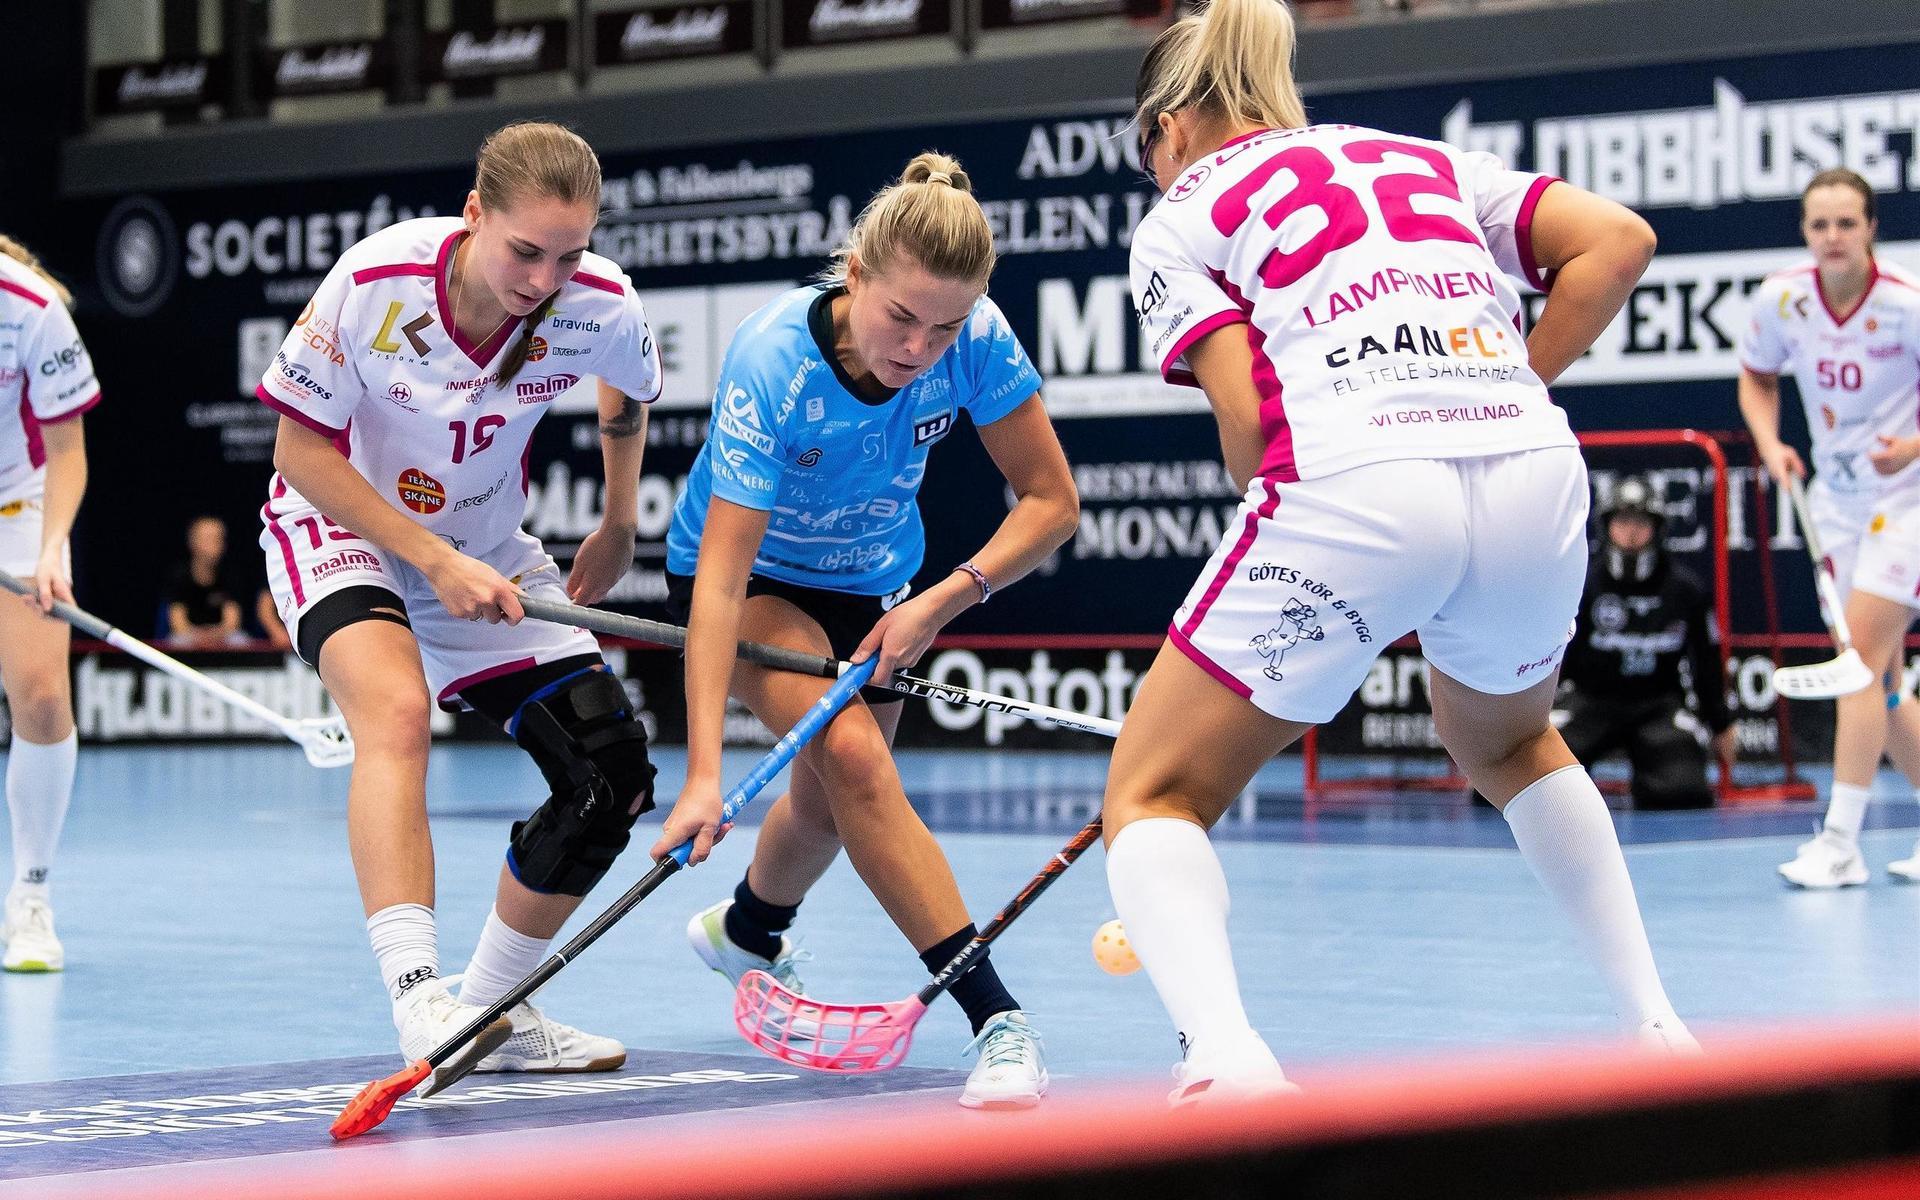  Malmö FBC:s Maja Mikaelsson och Warbergs Amanda Johansson.